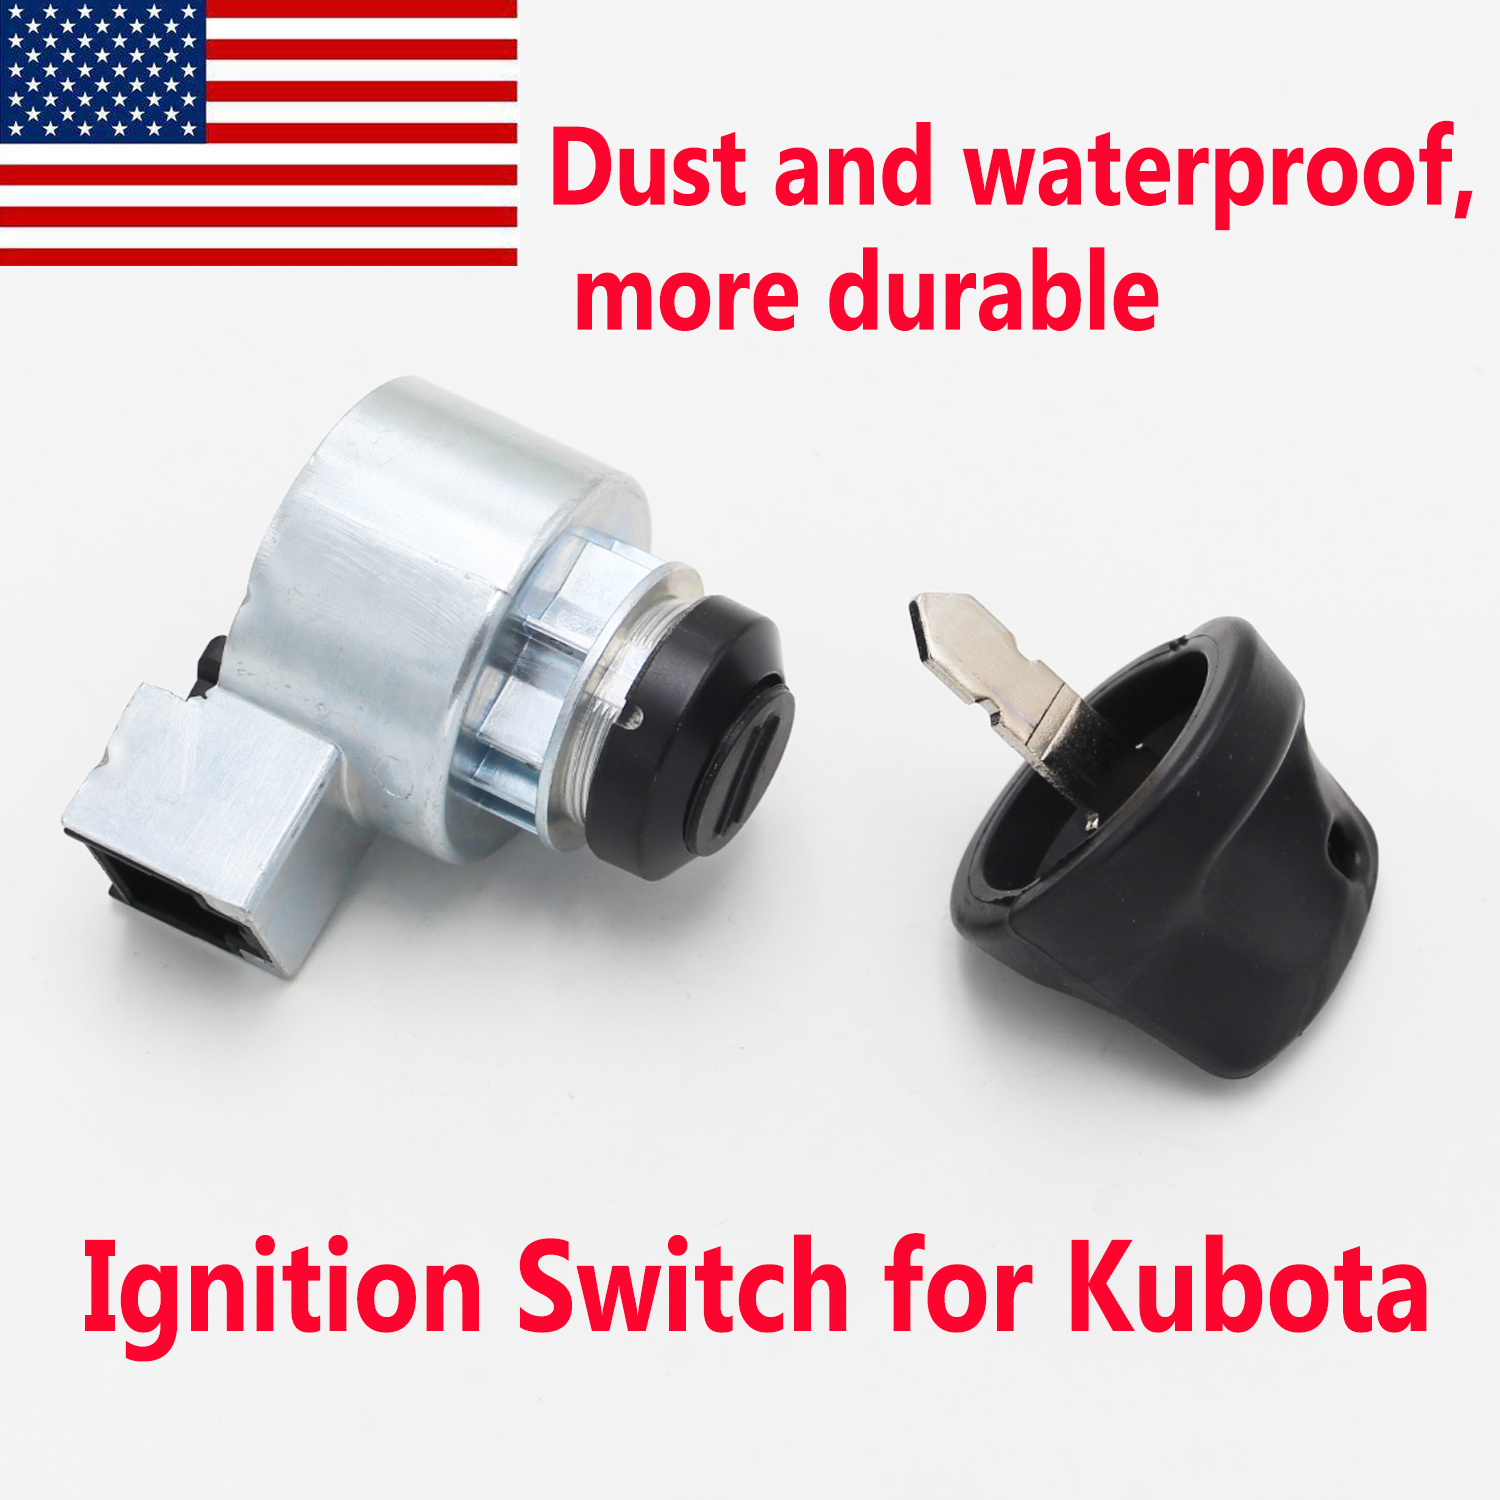 Ignition Switch with Key for Kubota B2100 B7500 B2400 B1700 B7510 6C040